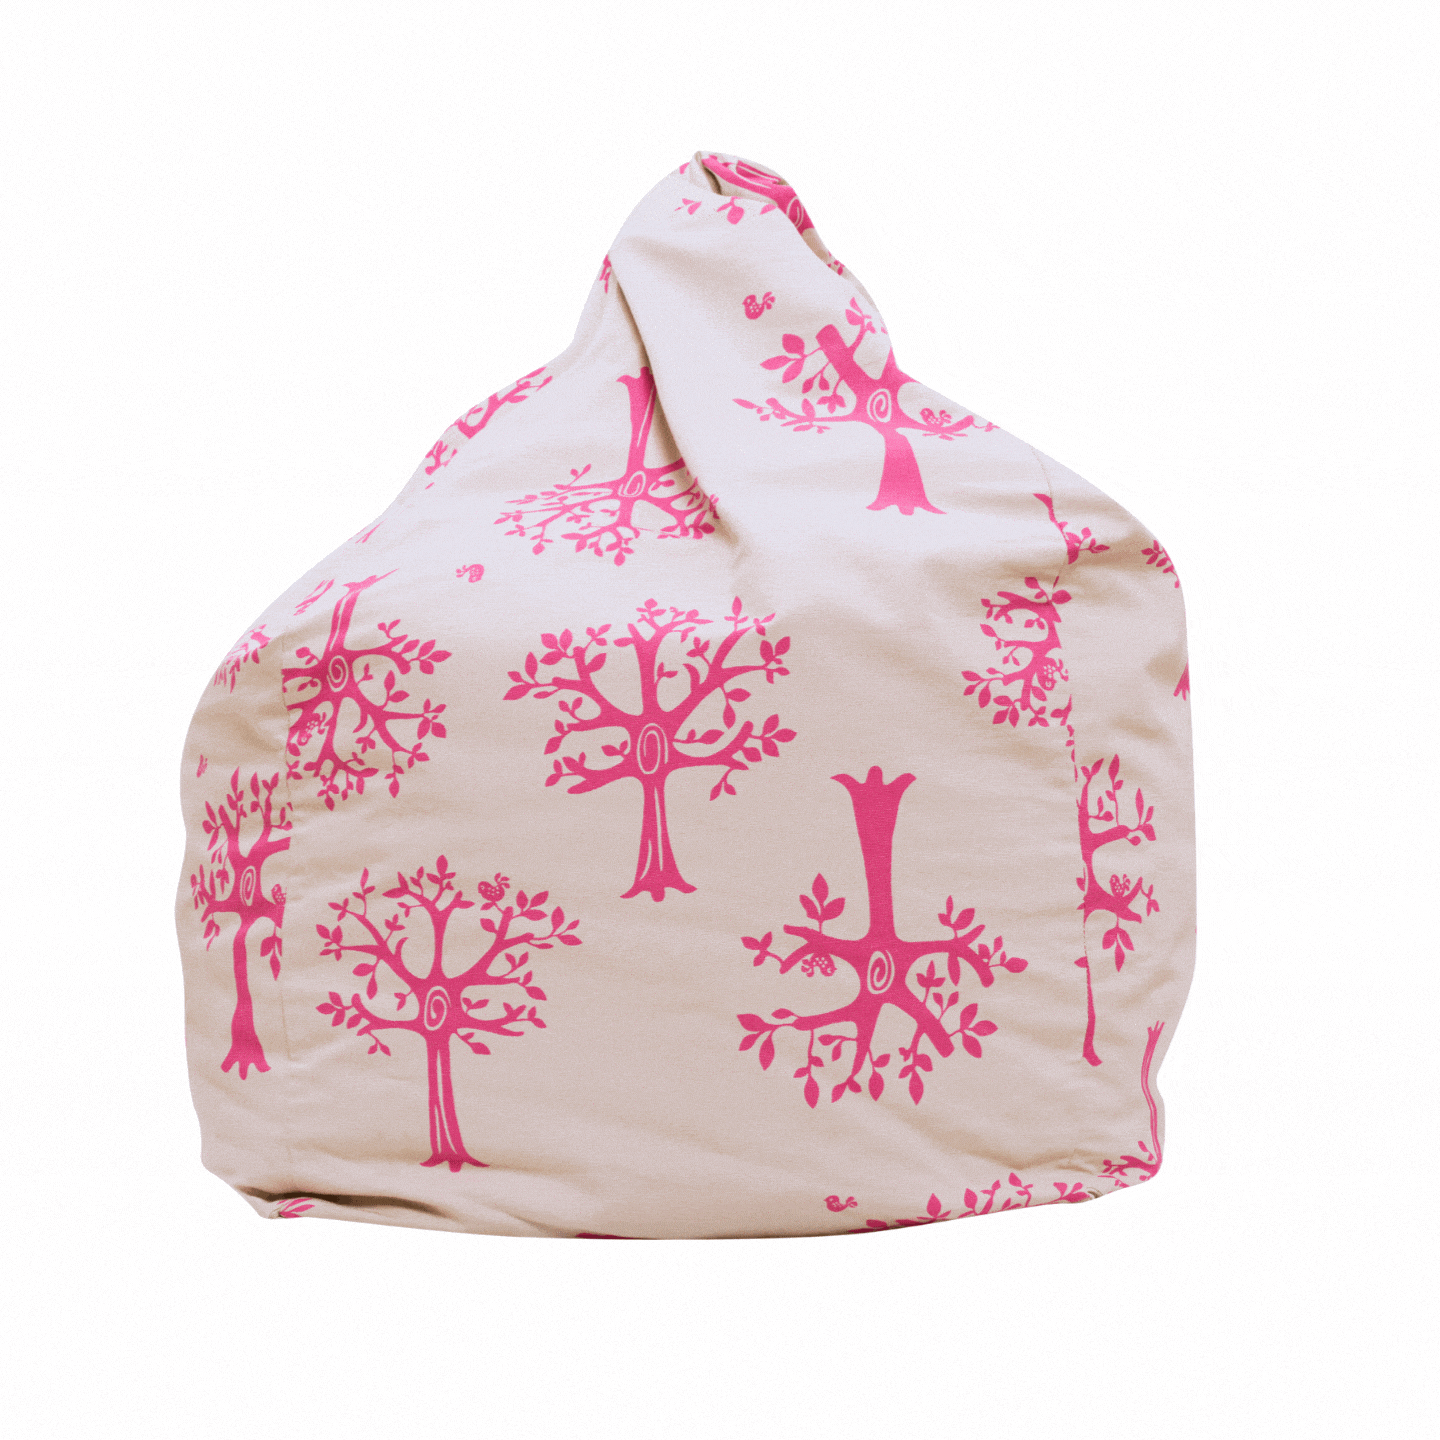 Orchard Pink Bean Bag